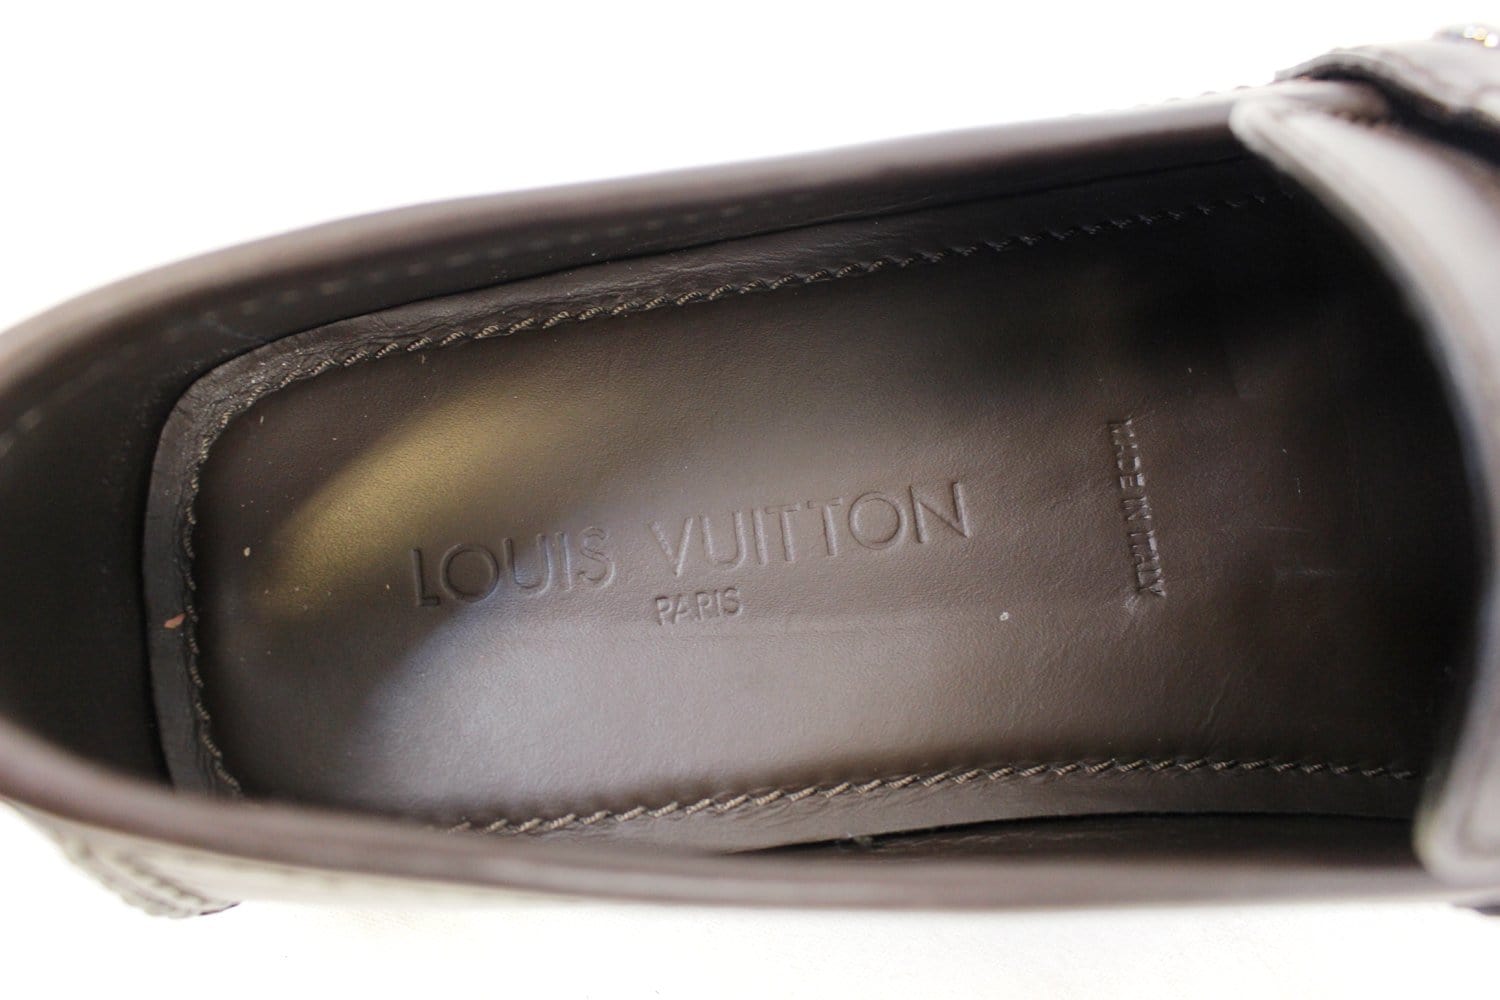 LOUIS VUITTON Dark Brown Monte Carlo Driving Shoes Size 9